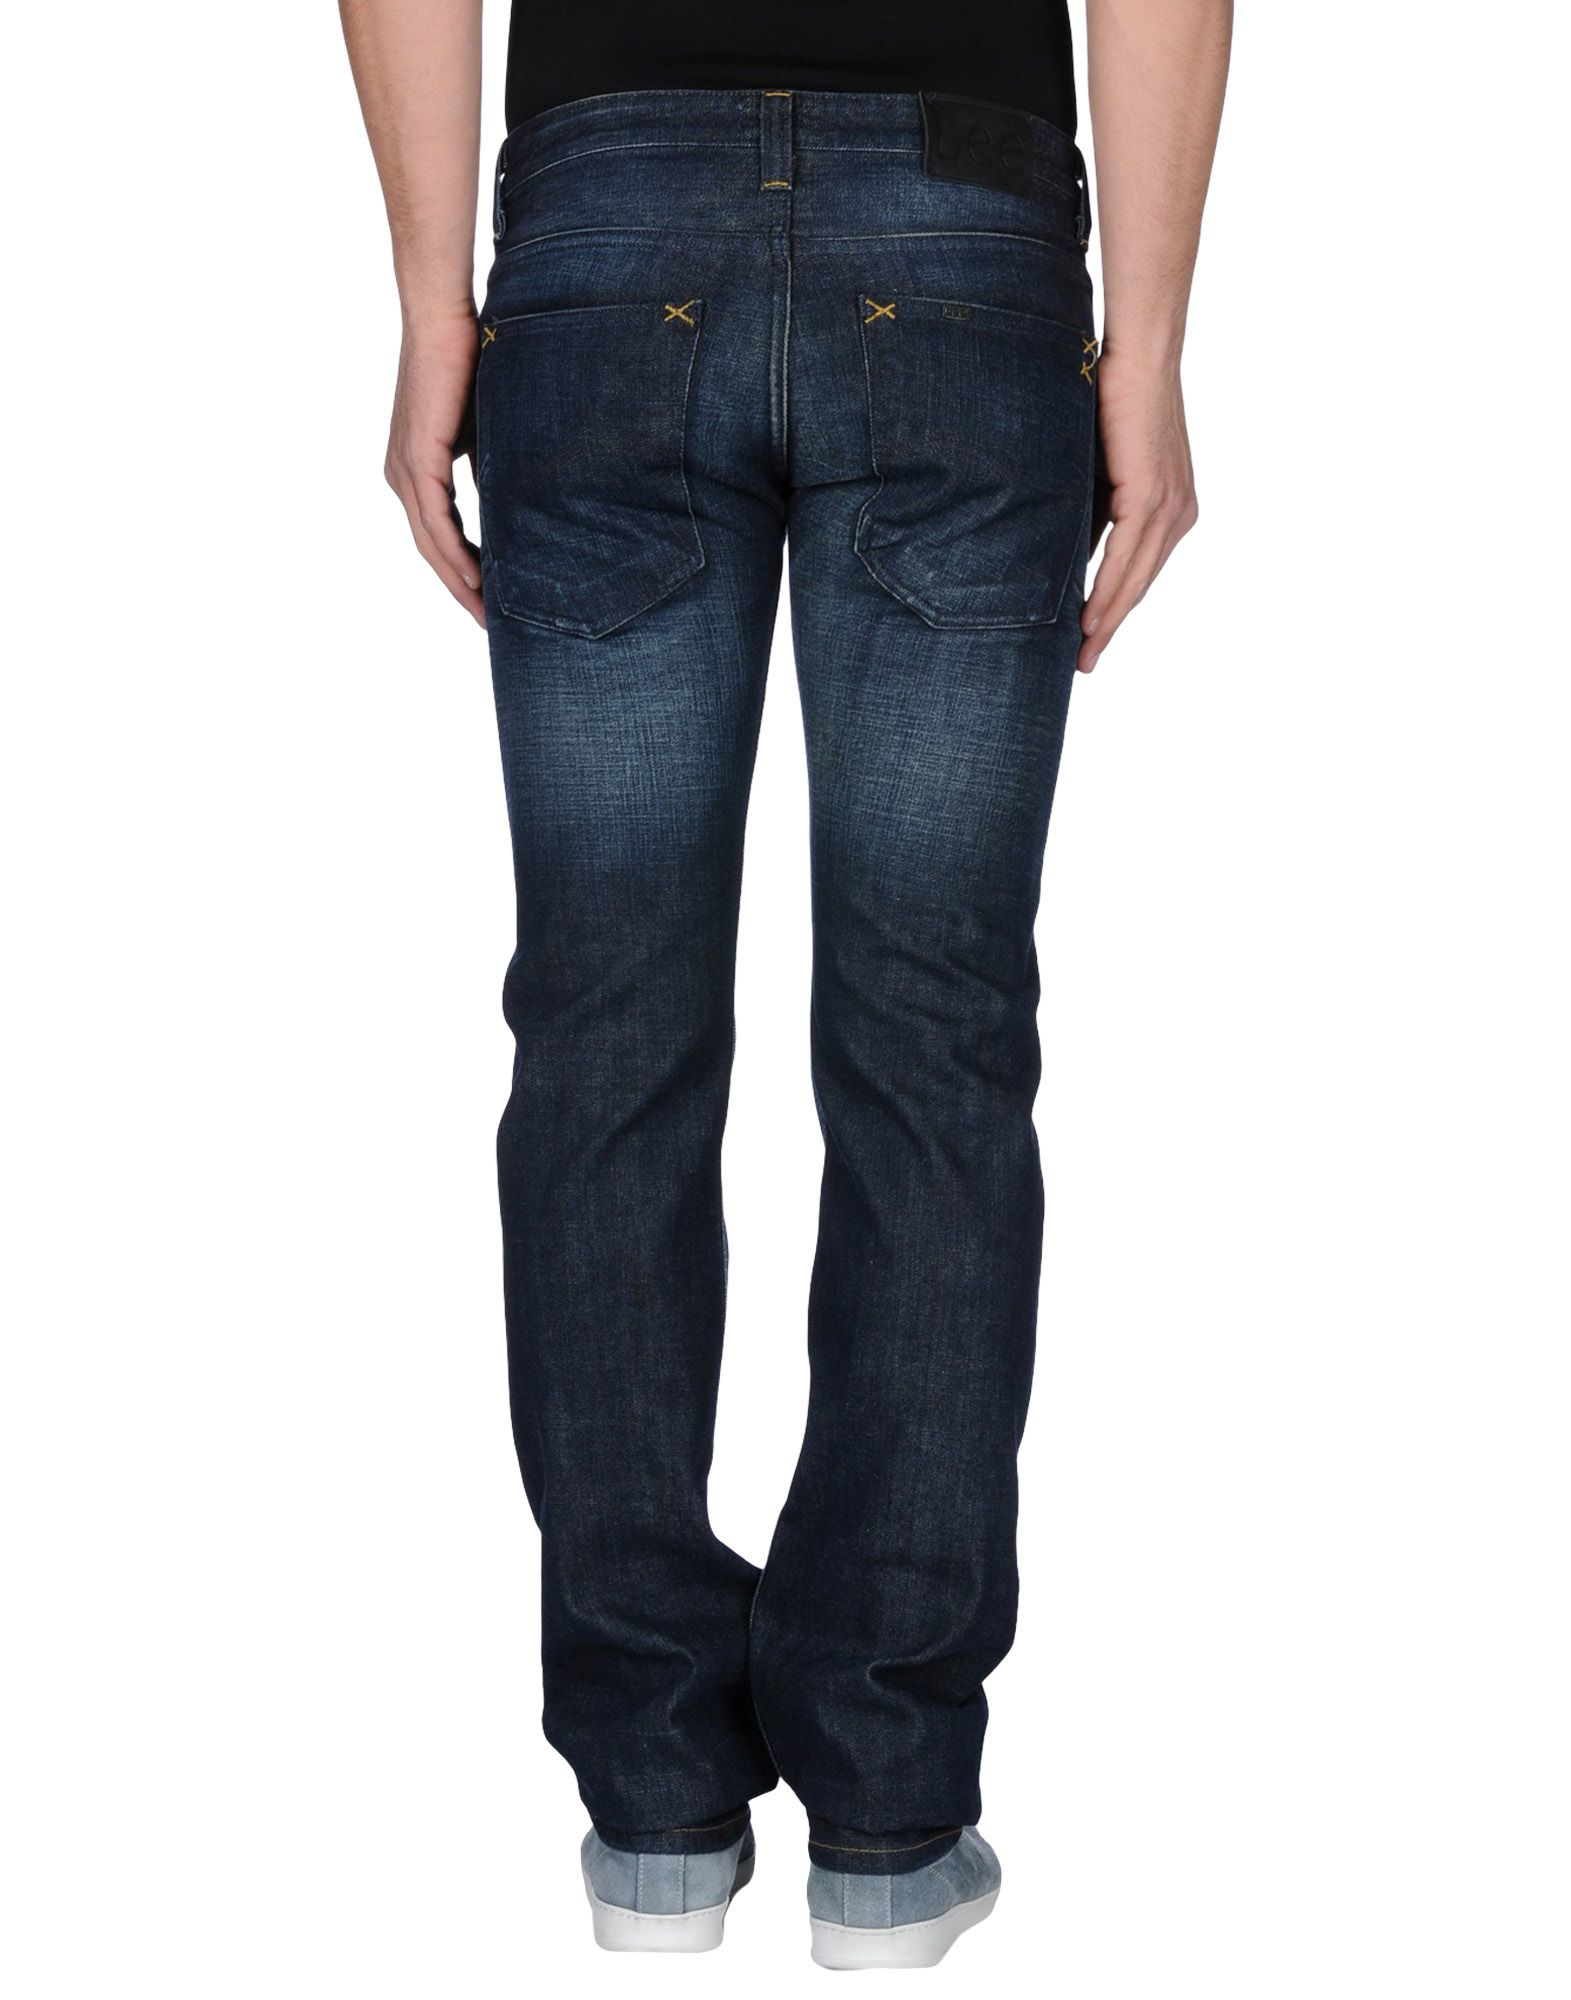 Lyst - Lee jeans Denim Pants in Blue for Men